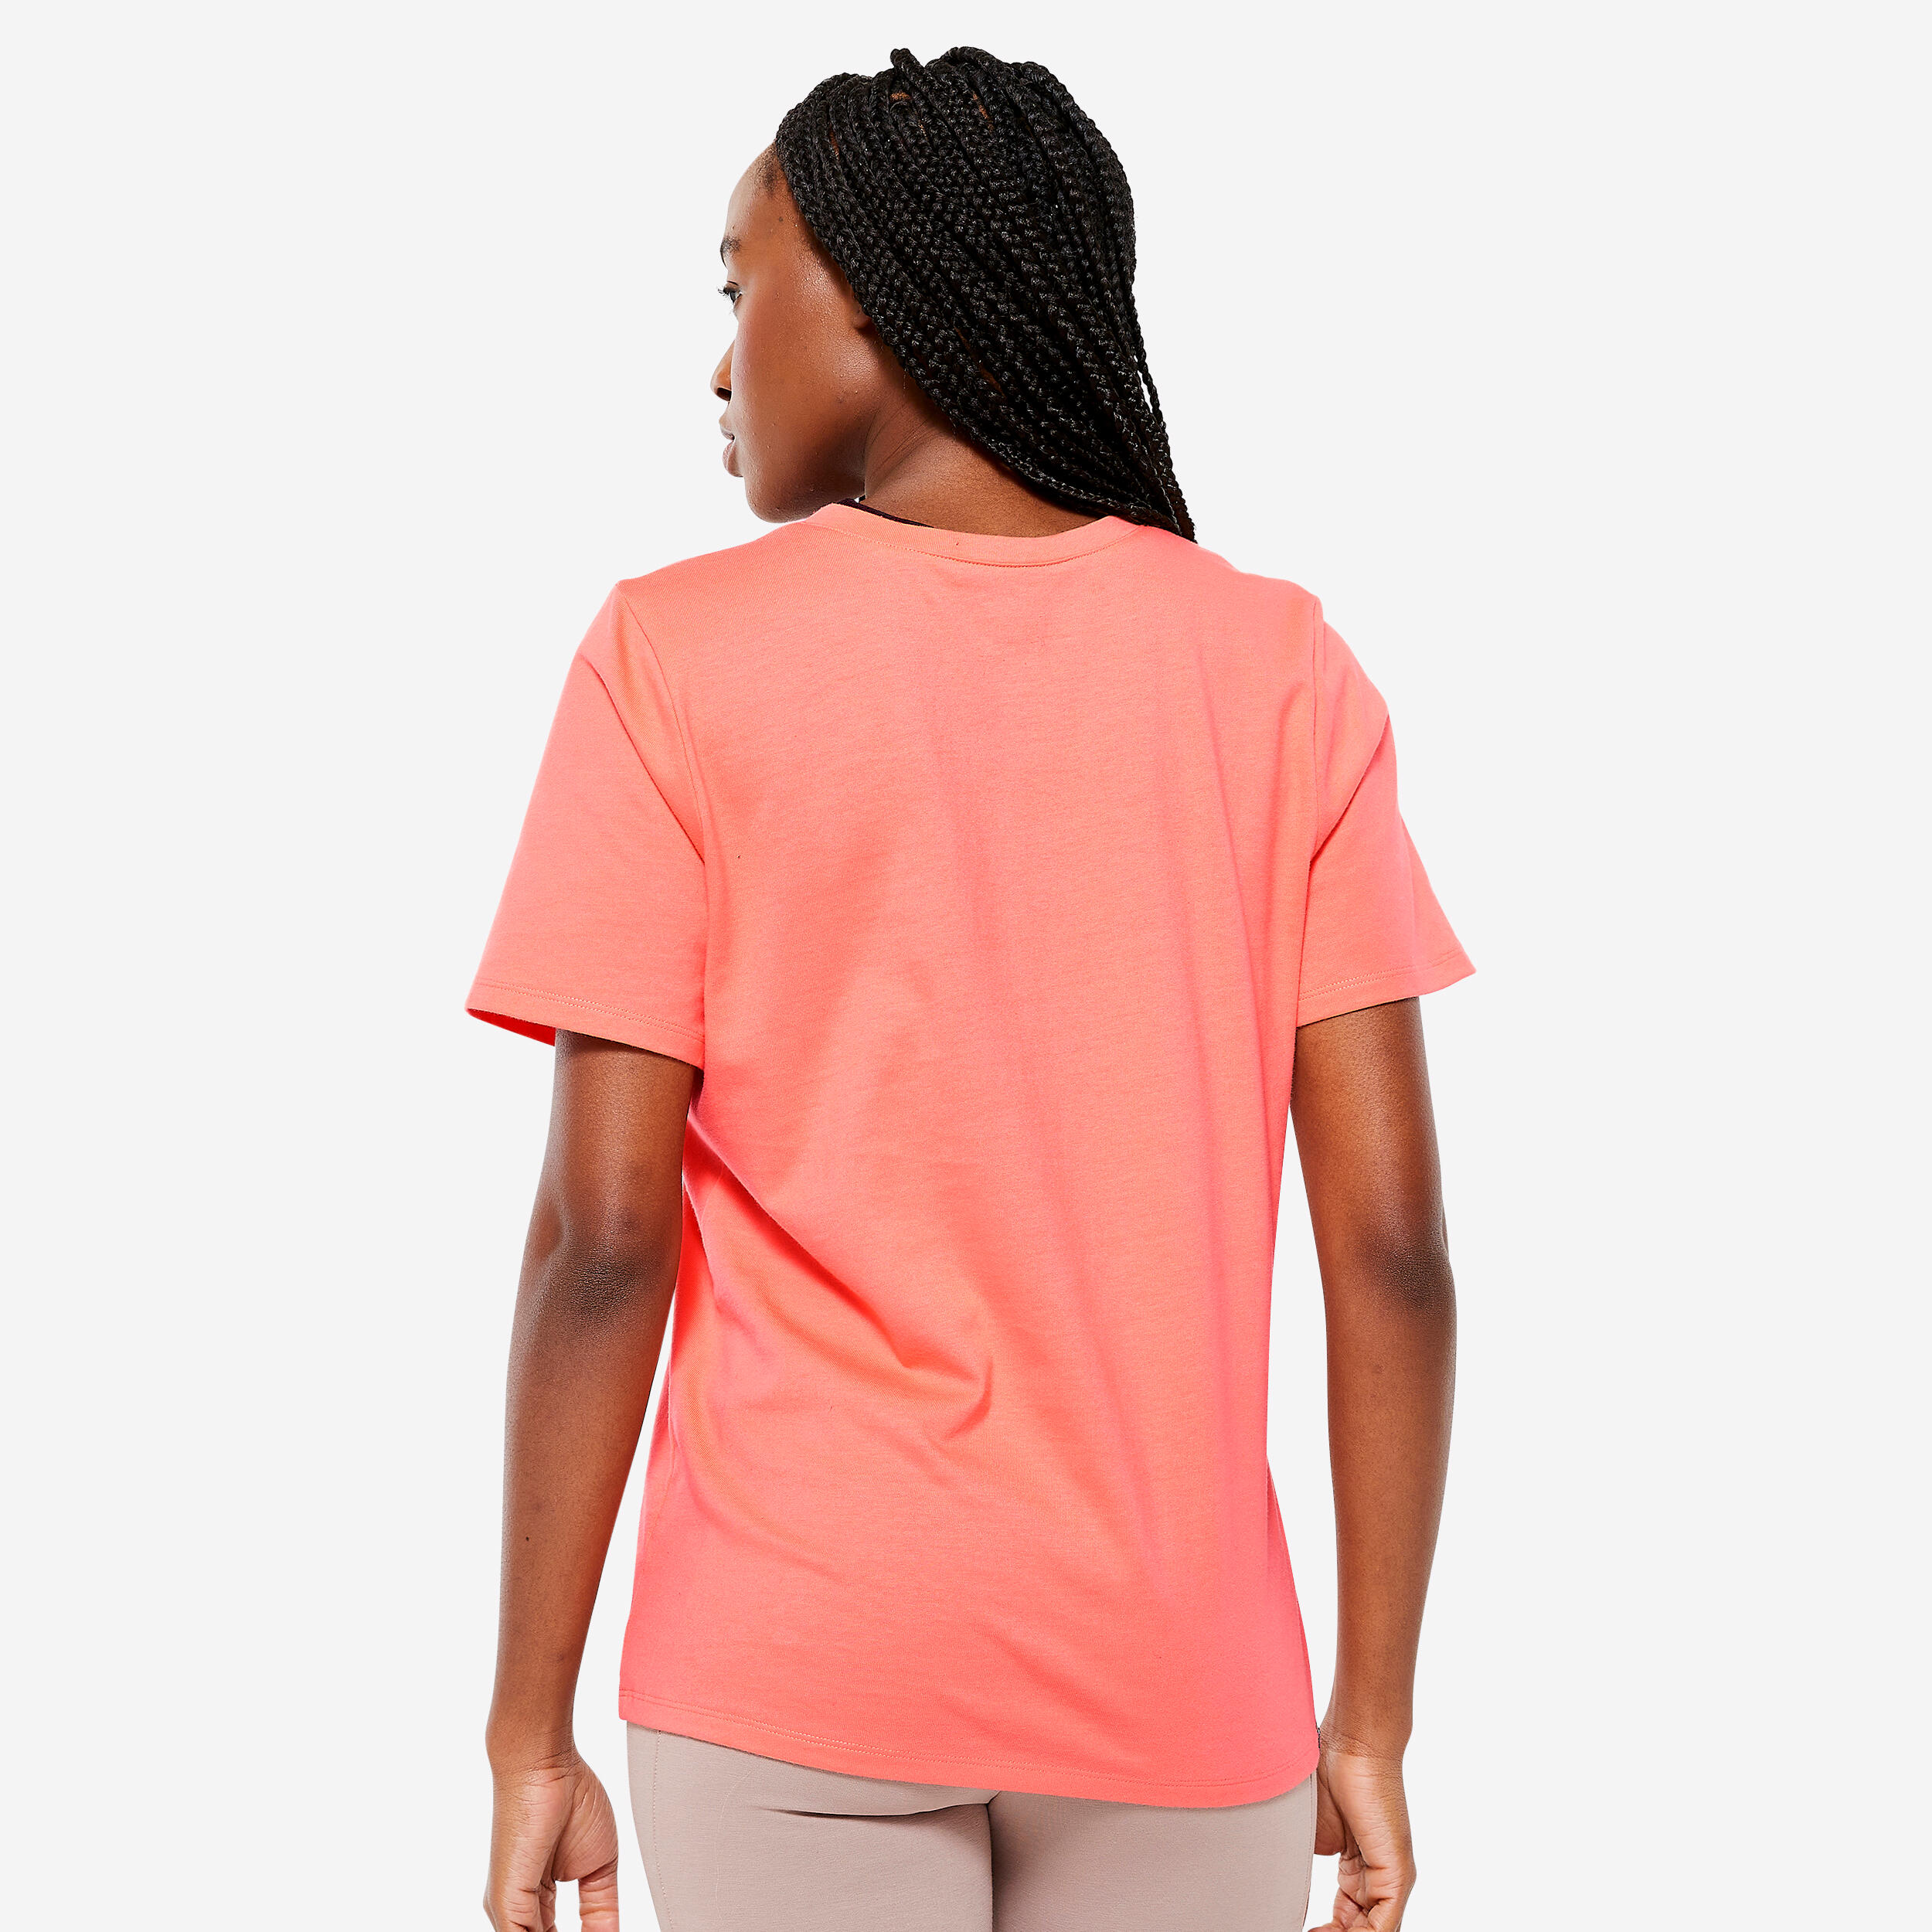 Women's V-Neck Fitness T-Shirt 500 - Pastel Pink 4/5